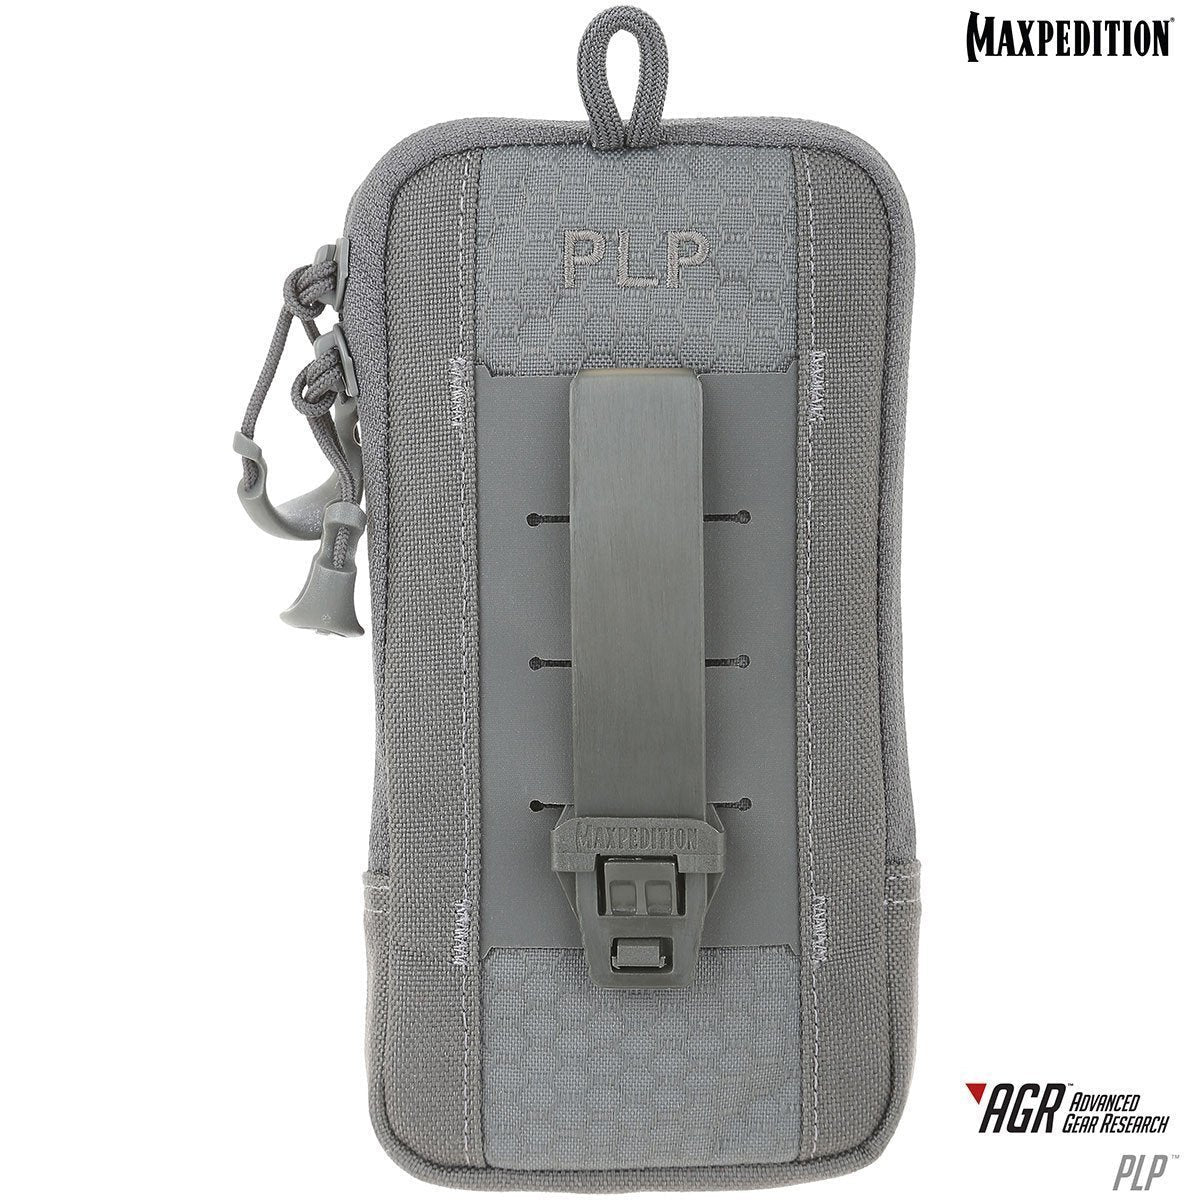 Maxpedition PLP iPhone 6/6S/7 Plus Pouch Accessories Maxpedition Tactical Gear Supplier Tactical Distributors Australia